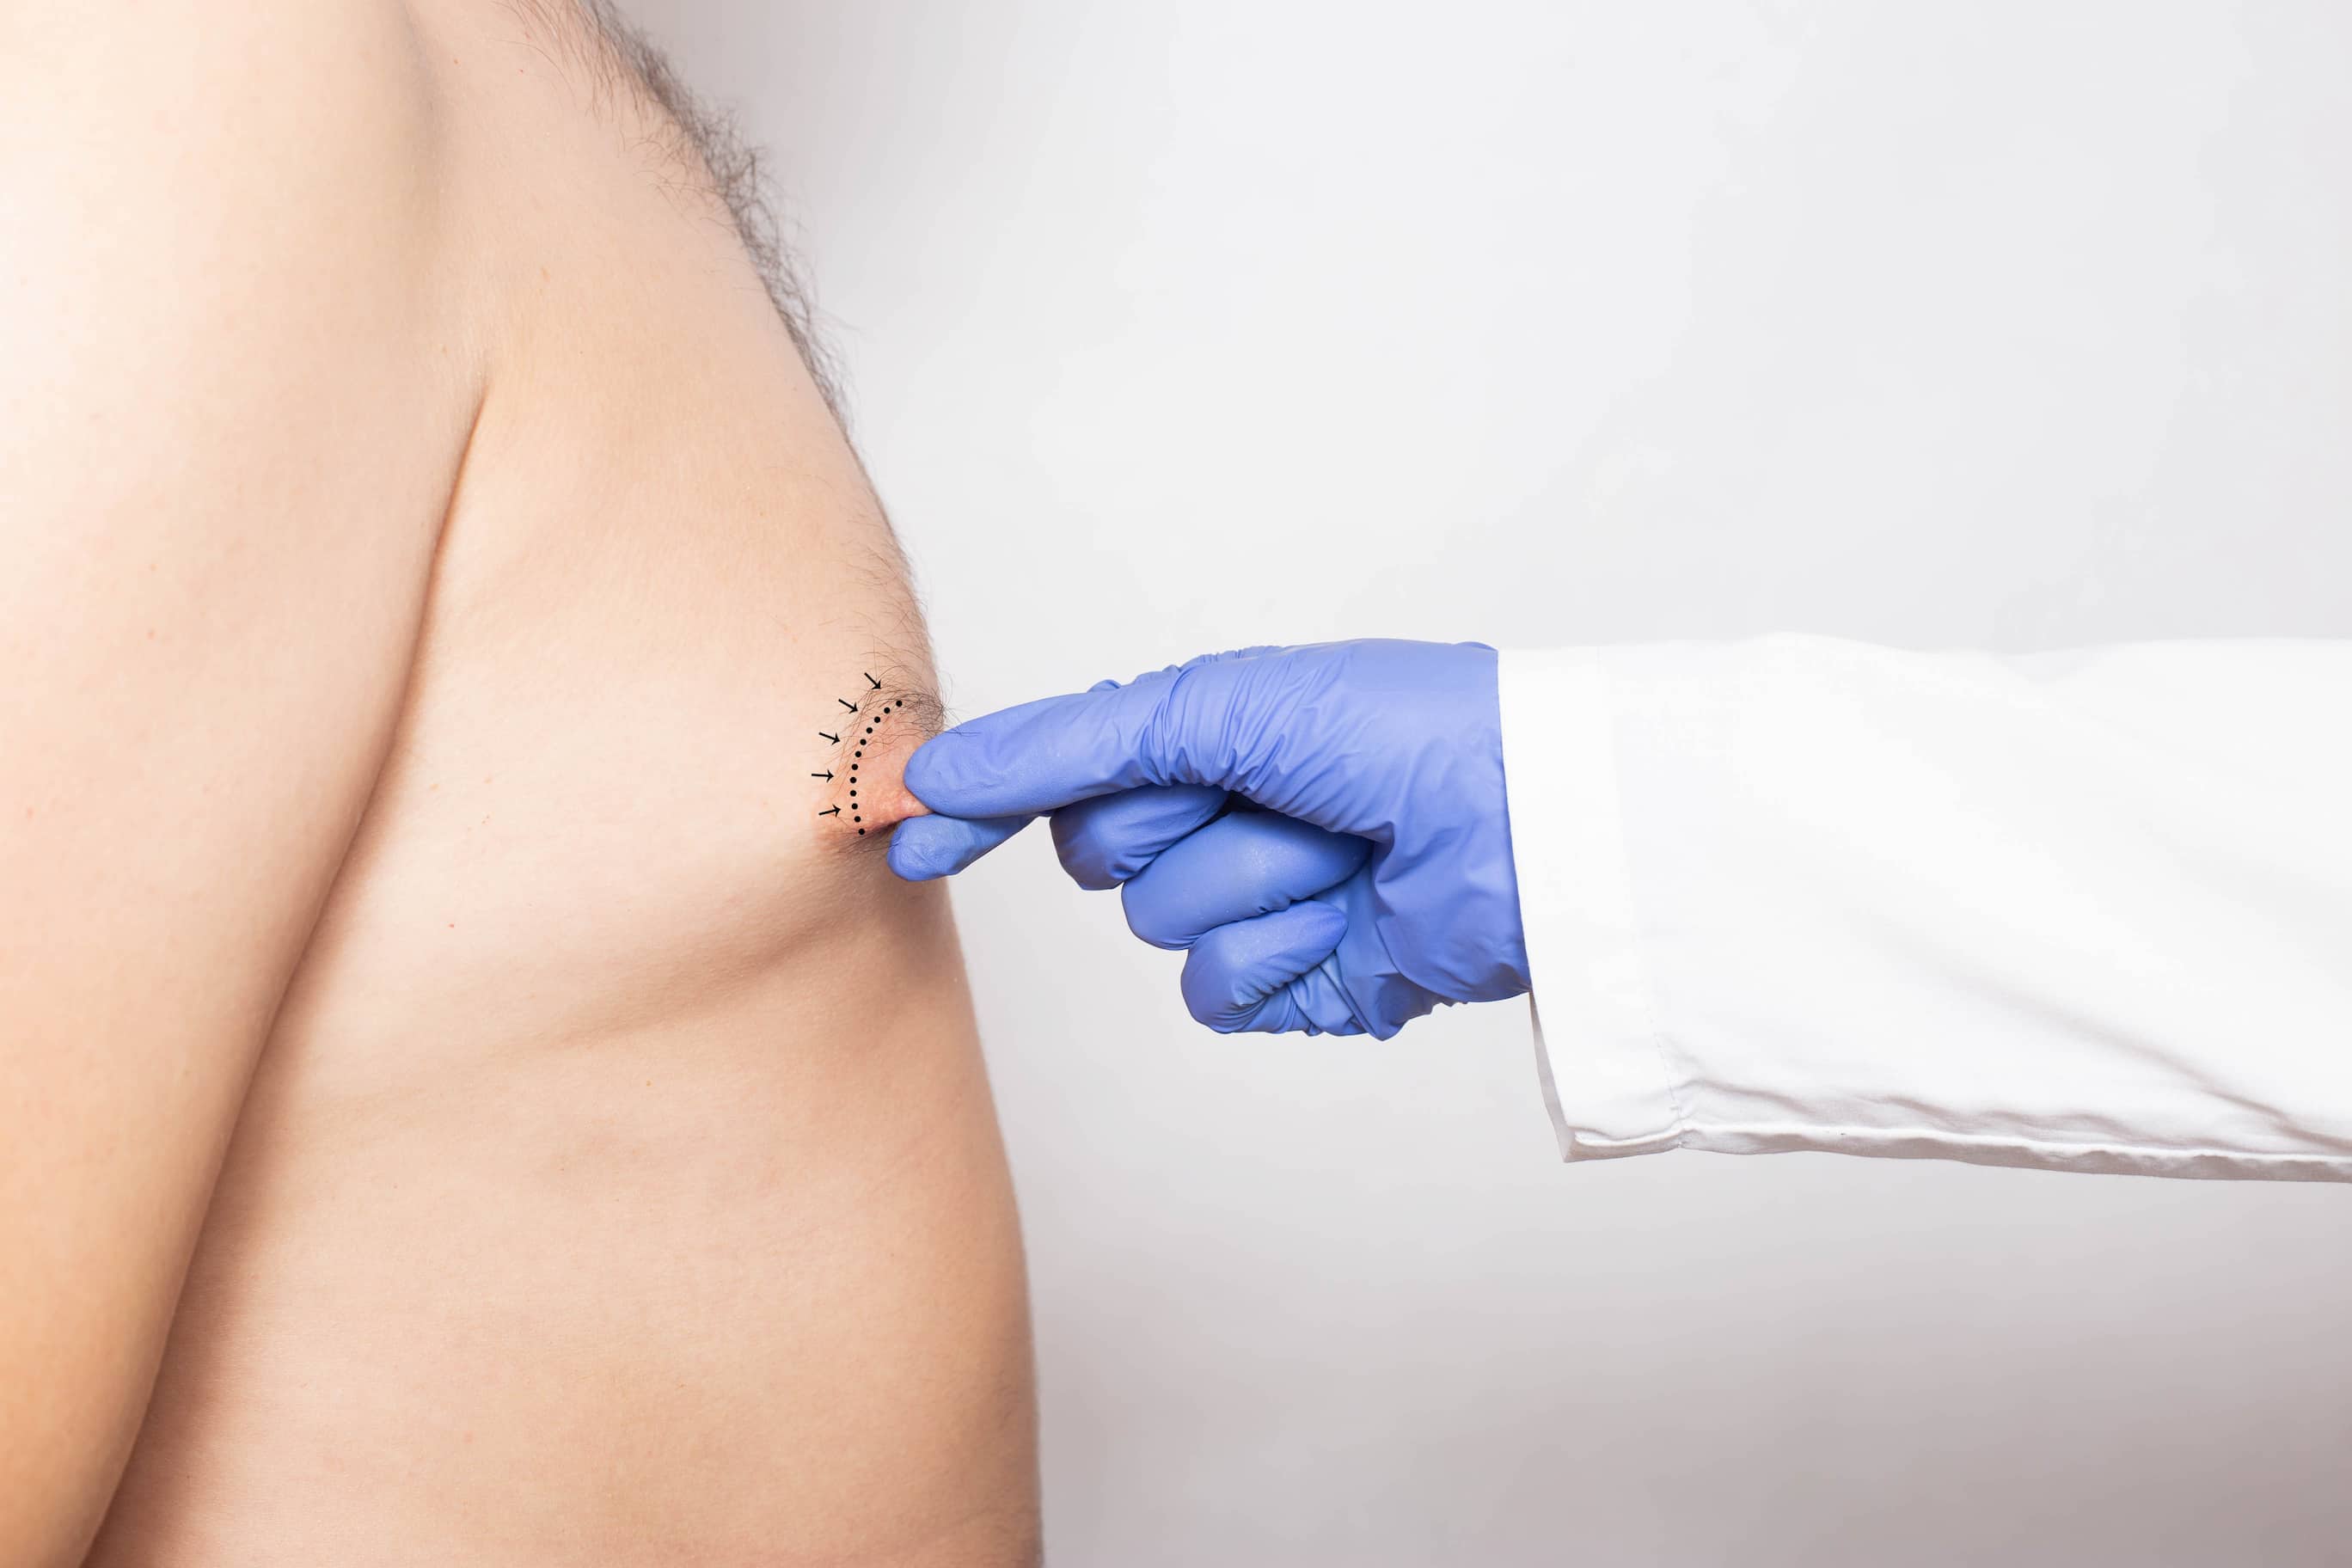 Turkey nipple reduction surgery